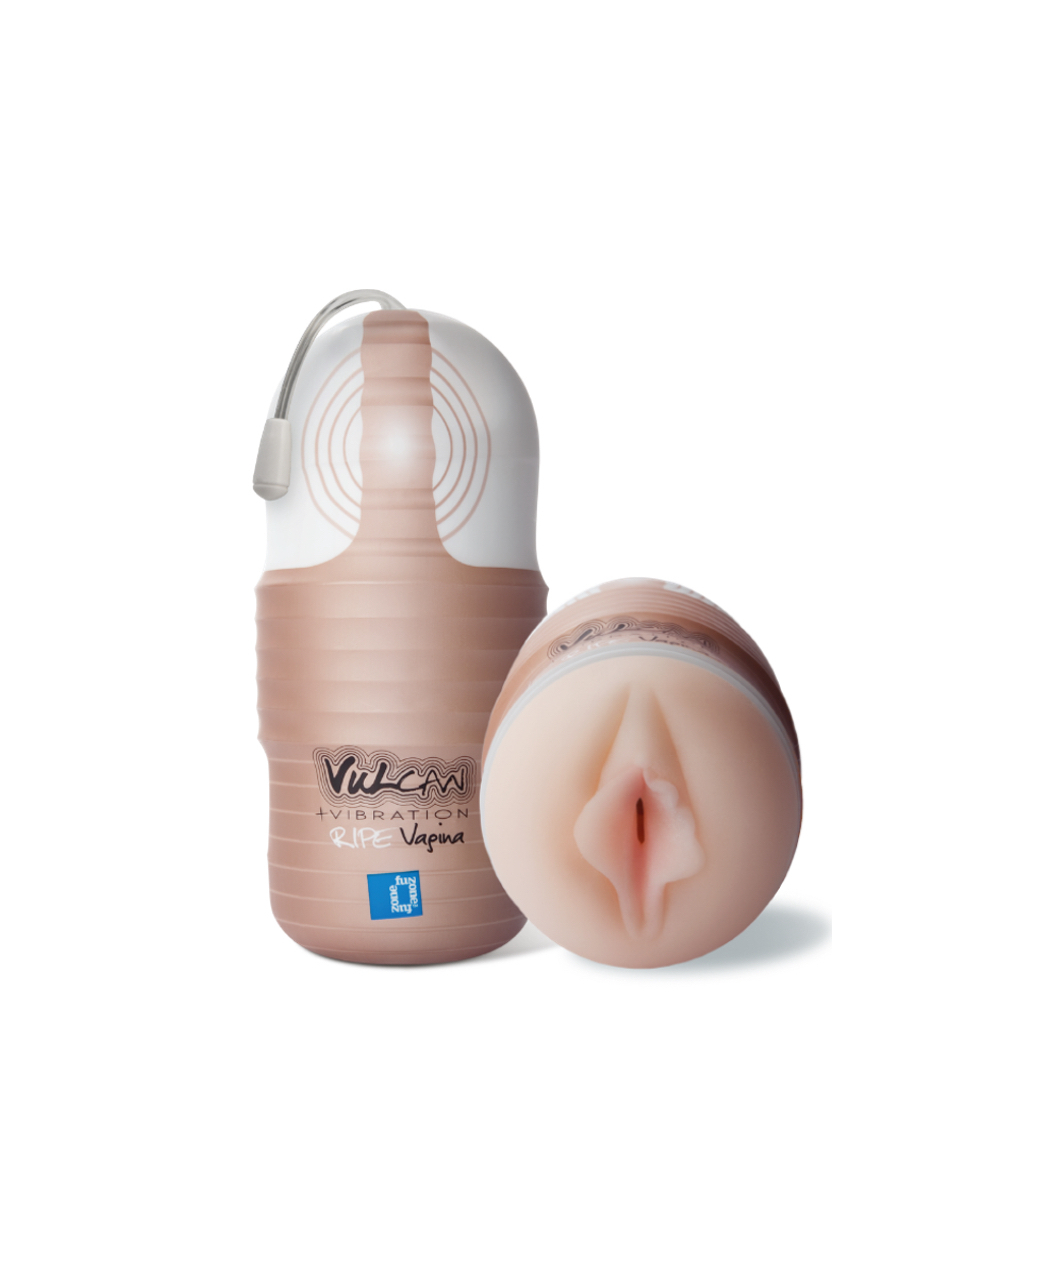 Vulcan Vibration Ripe Vagina